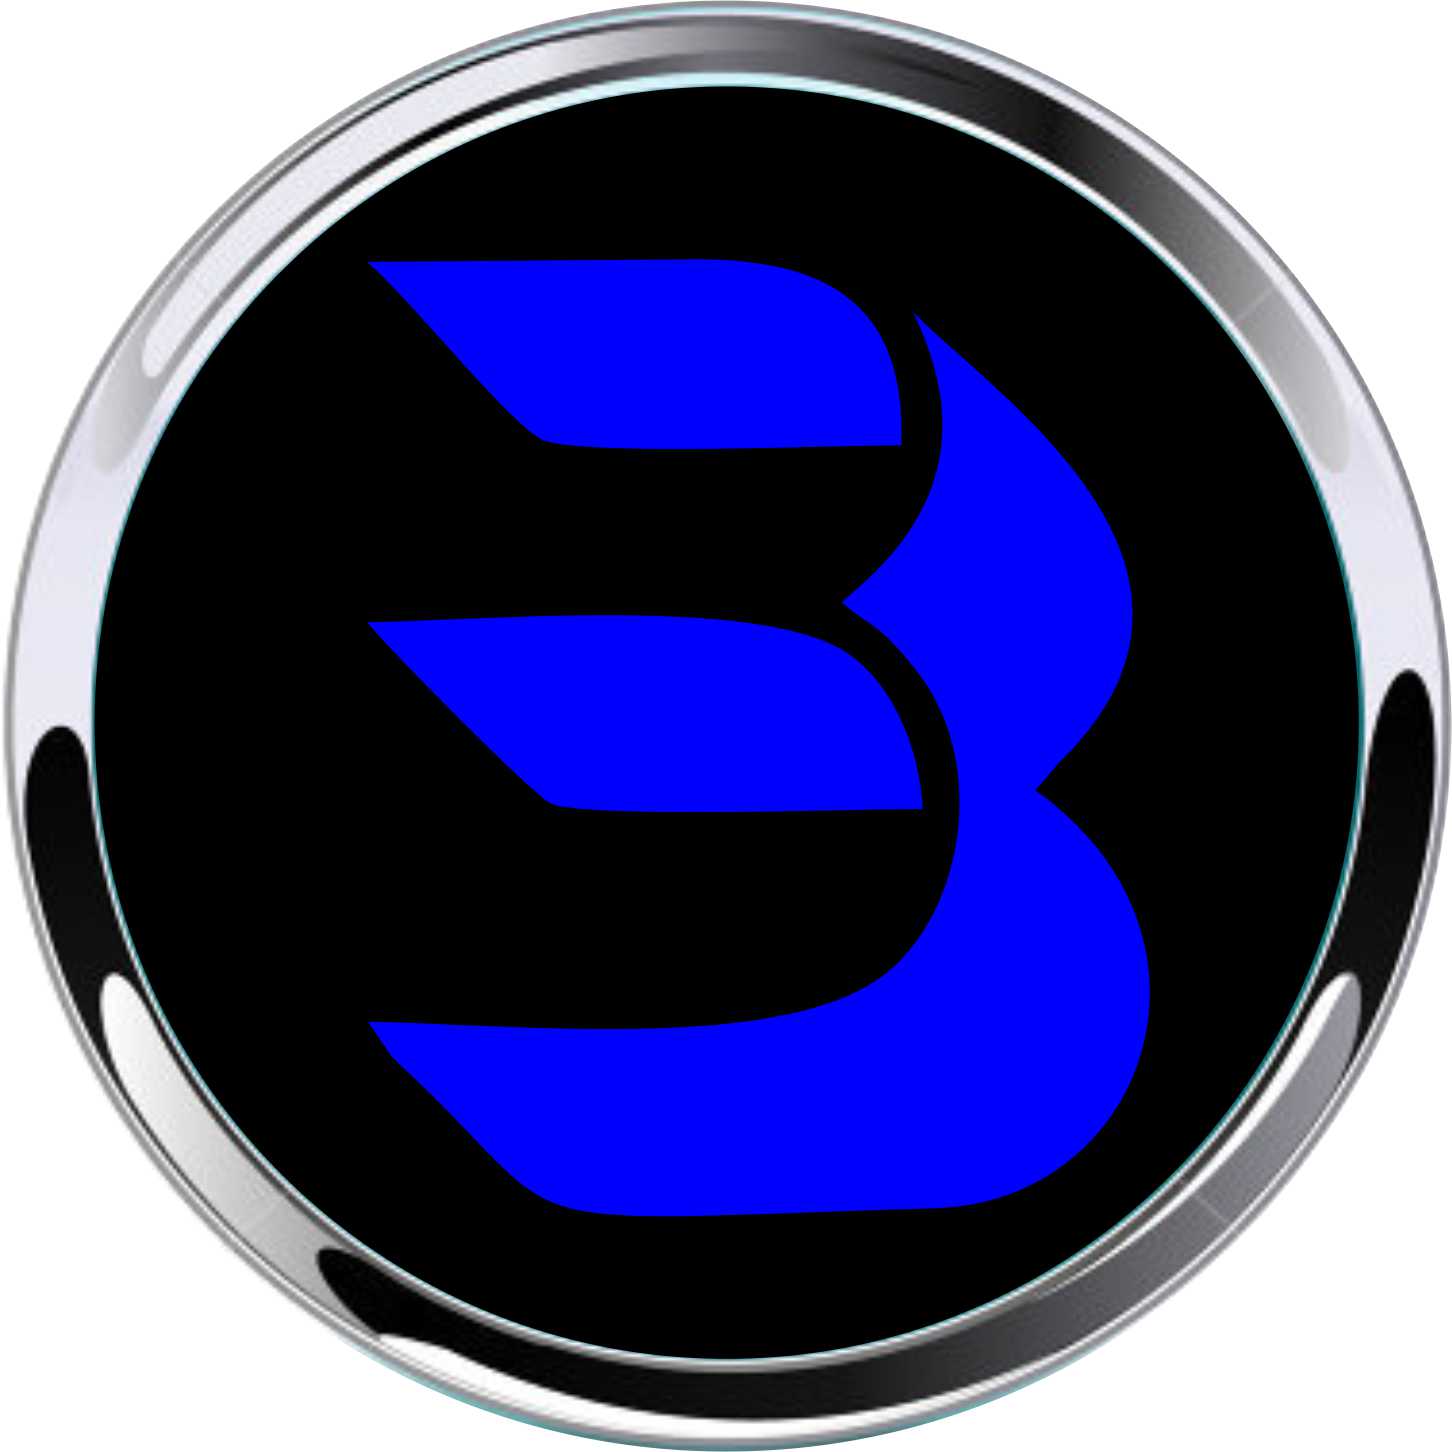 BSC - Custom made metal emblem